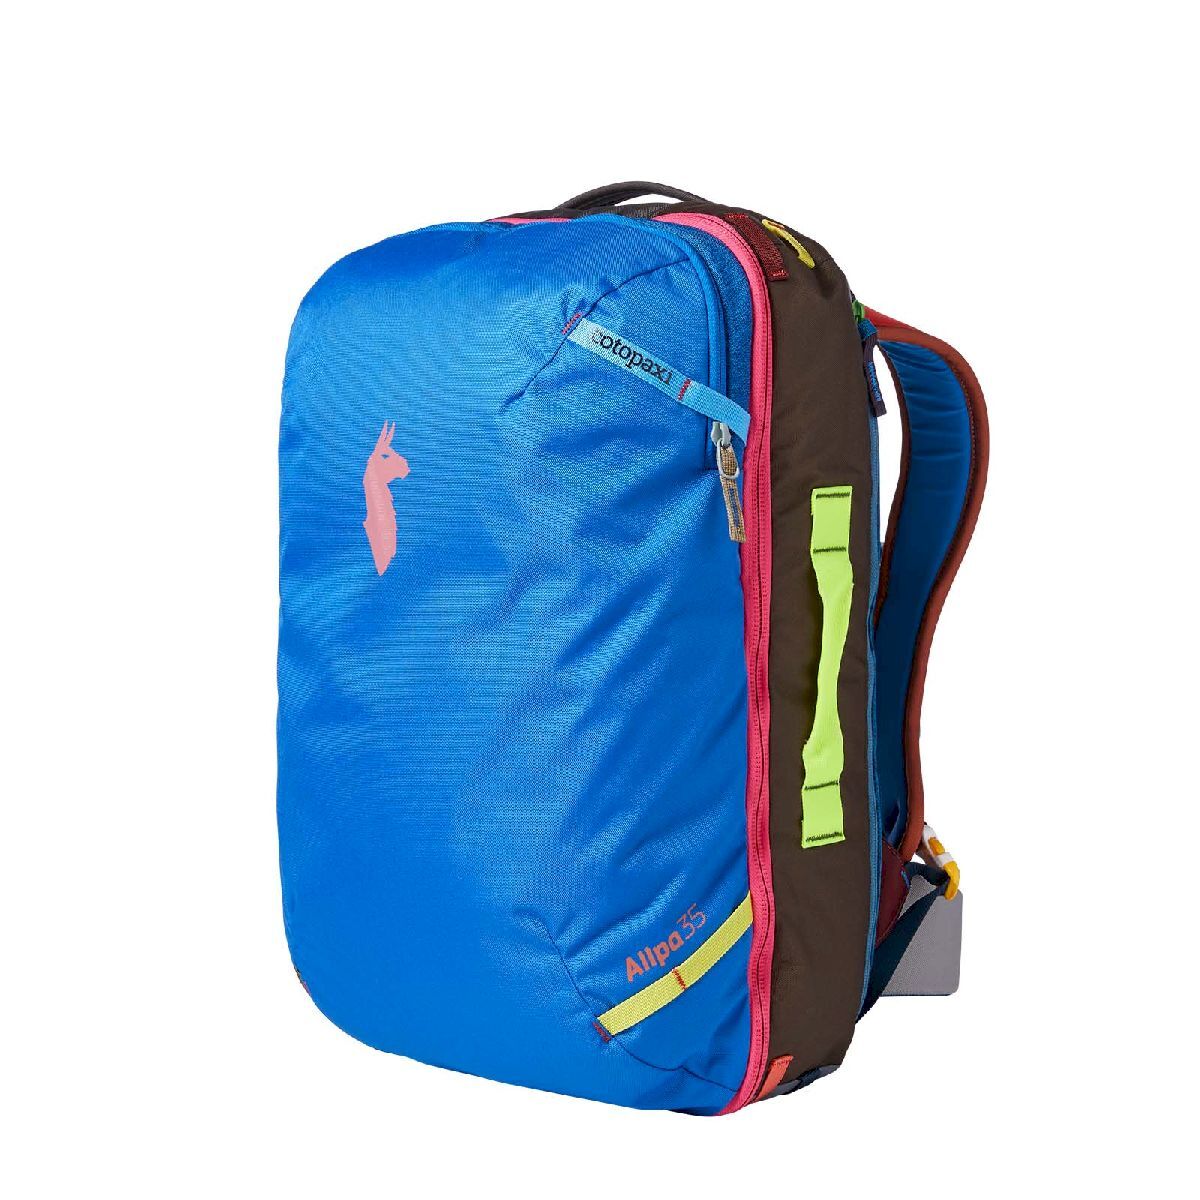 Cotopaxi Allpa 35L Travel Pack - Reseryggsäck